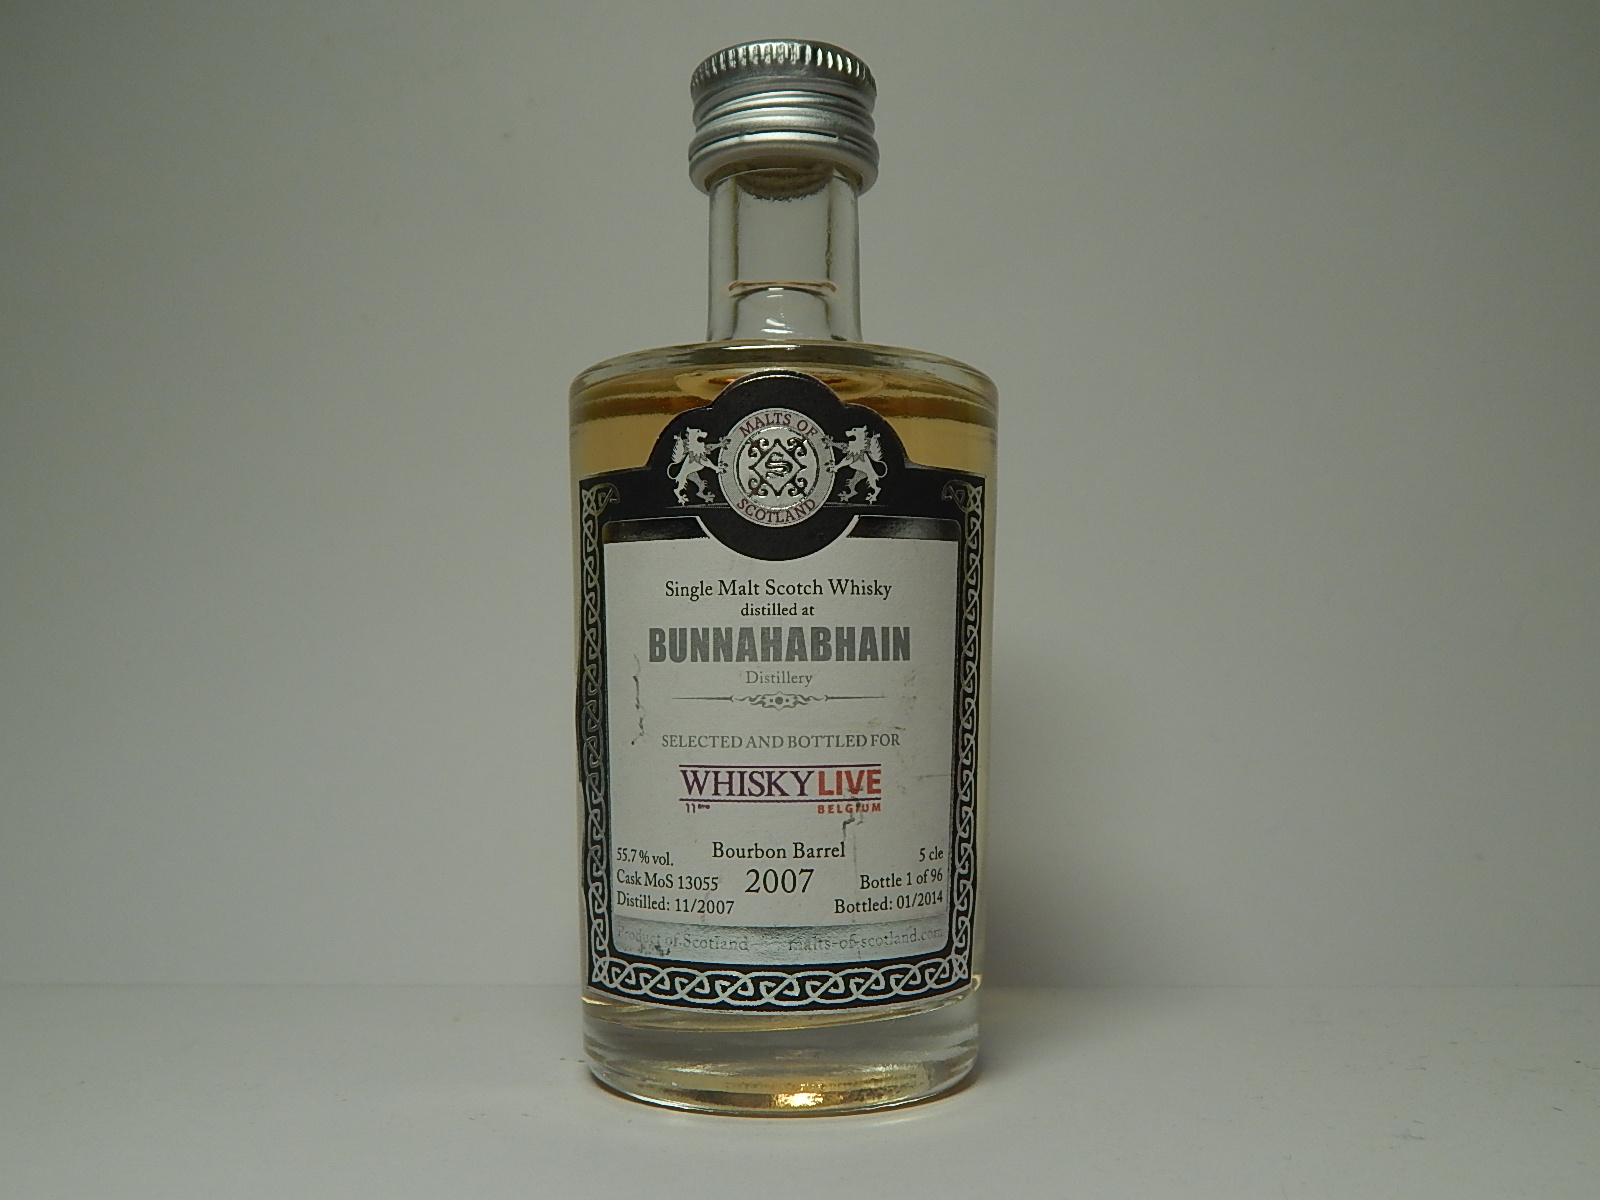 WHISKYLIVE SMSW Bourbon Barrel 7yo 2007-2014 "Malts of Scotland" 5cle 55,7%vol.